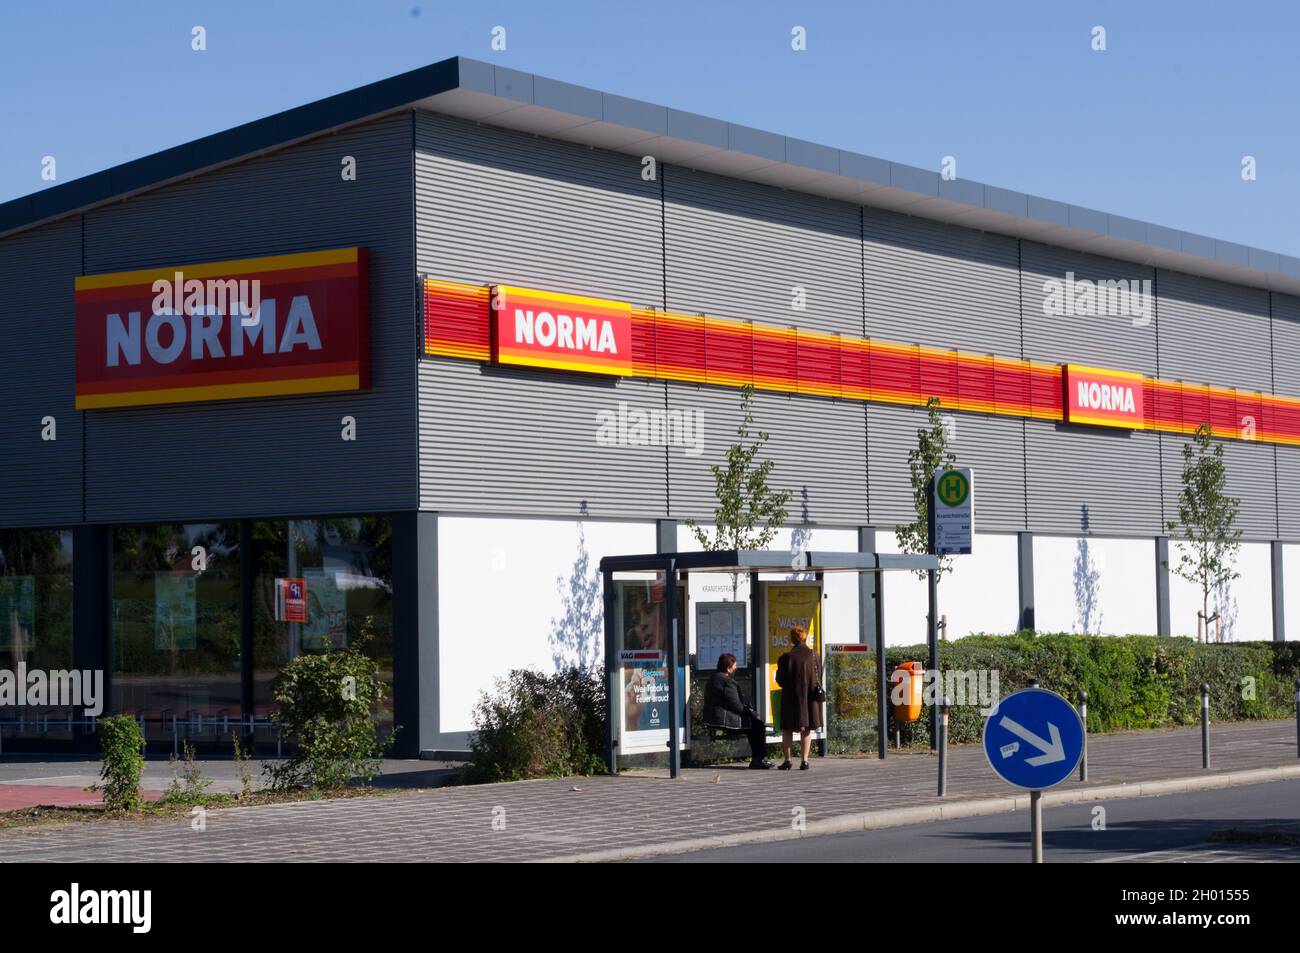 Norma discounter shop with company logo Stock Photo